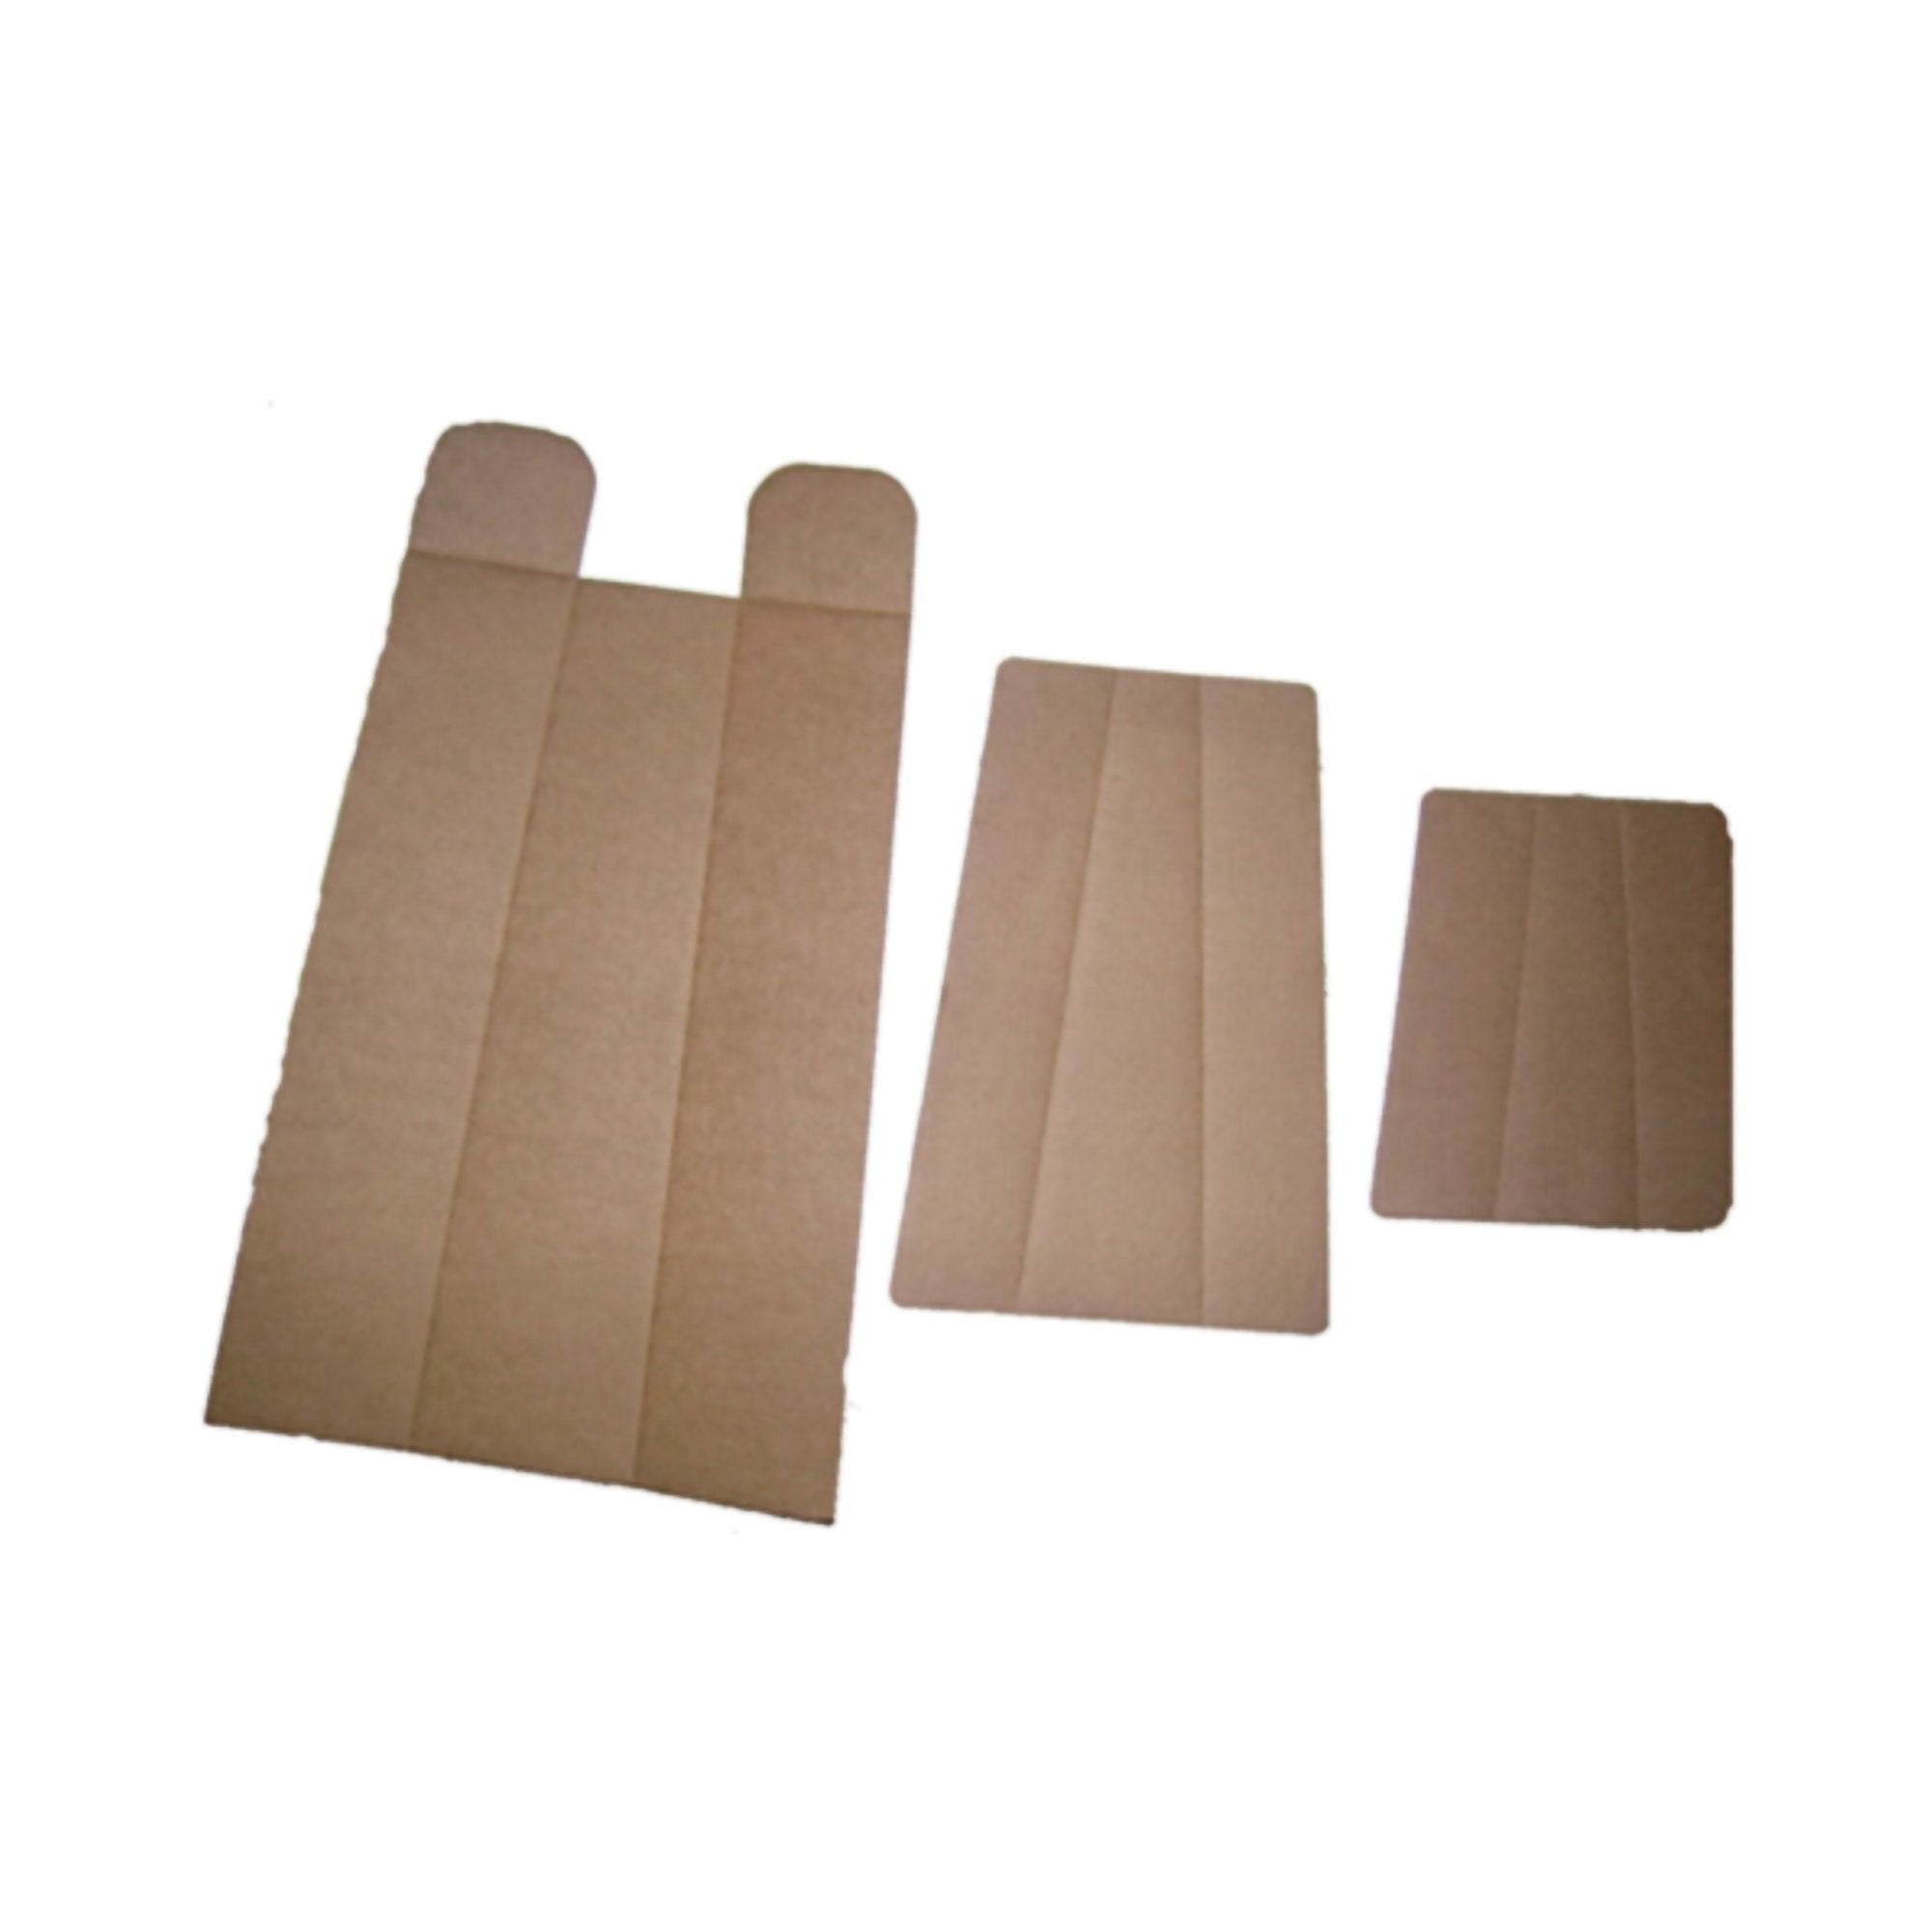 McKesson General Purpose Splint Folding Splint Cardboard Brown 18 Inch Length